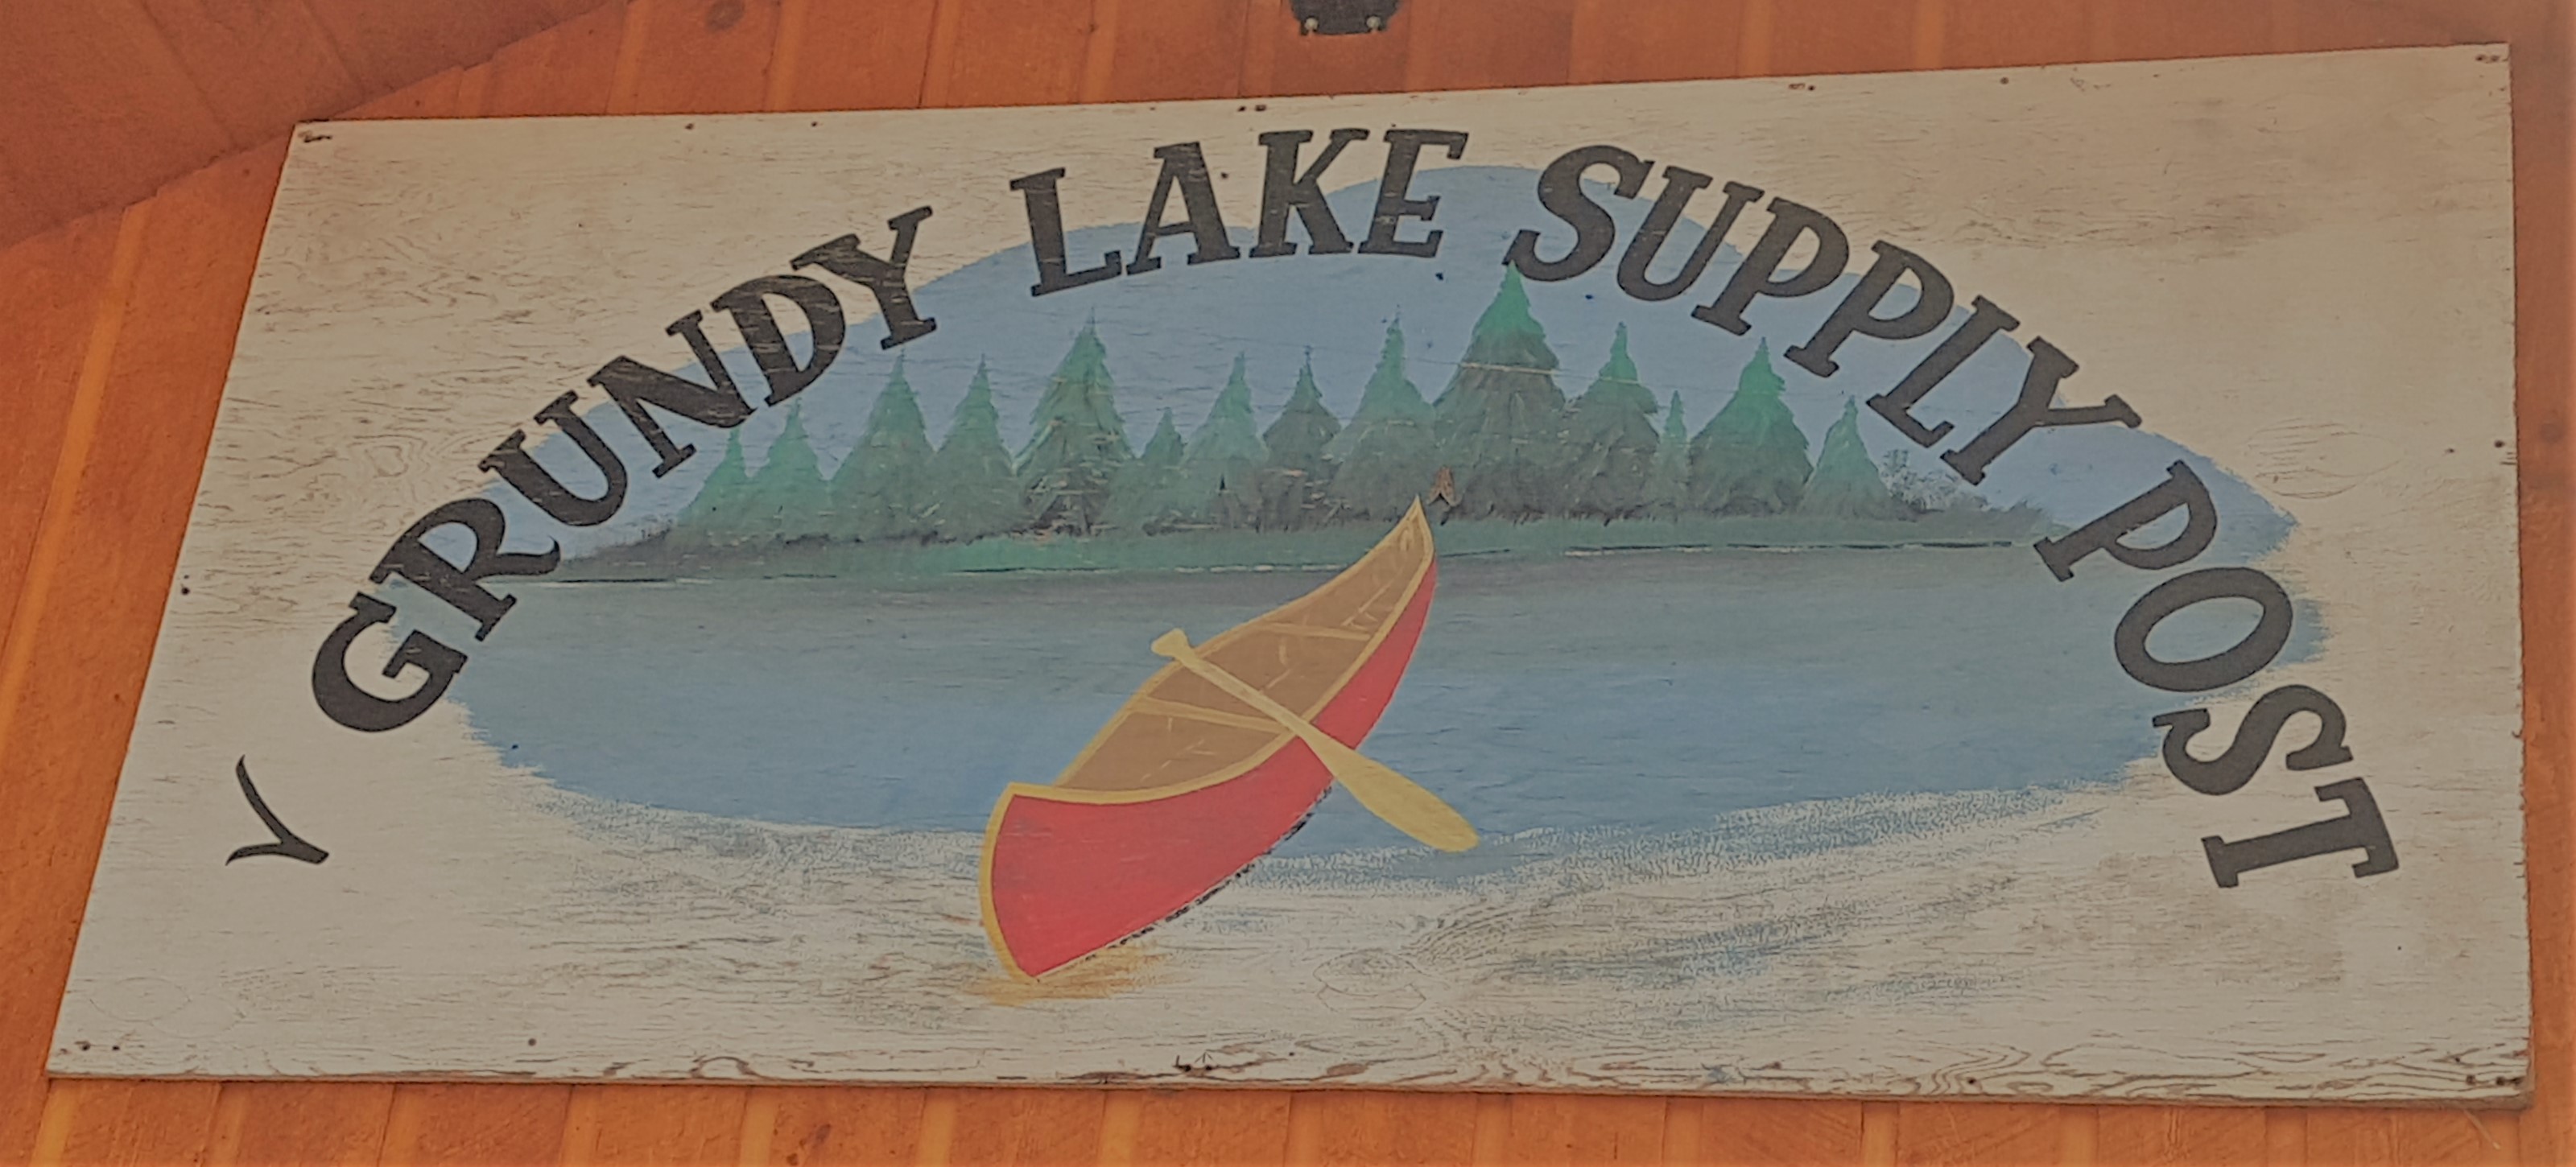 Grundy Lake Supply Post Sign